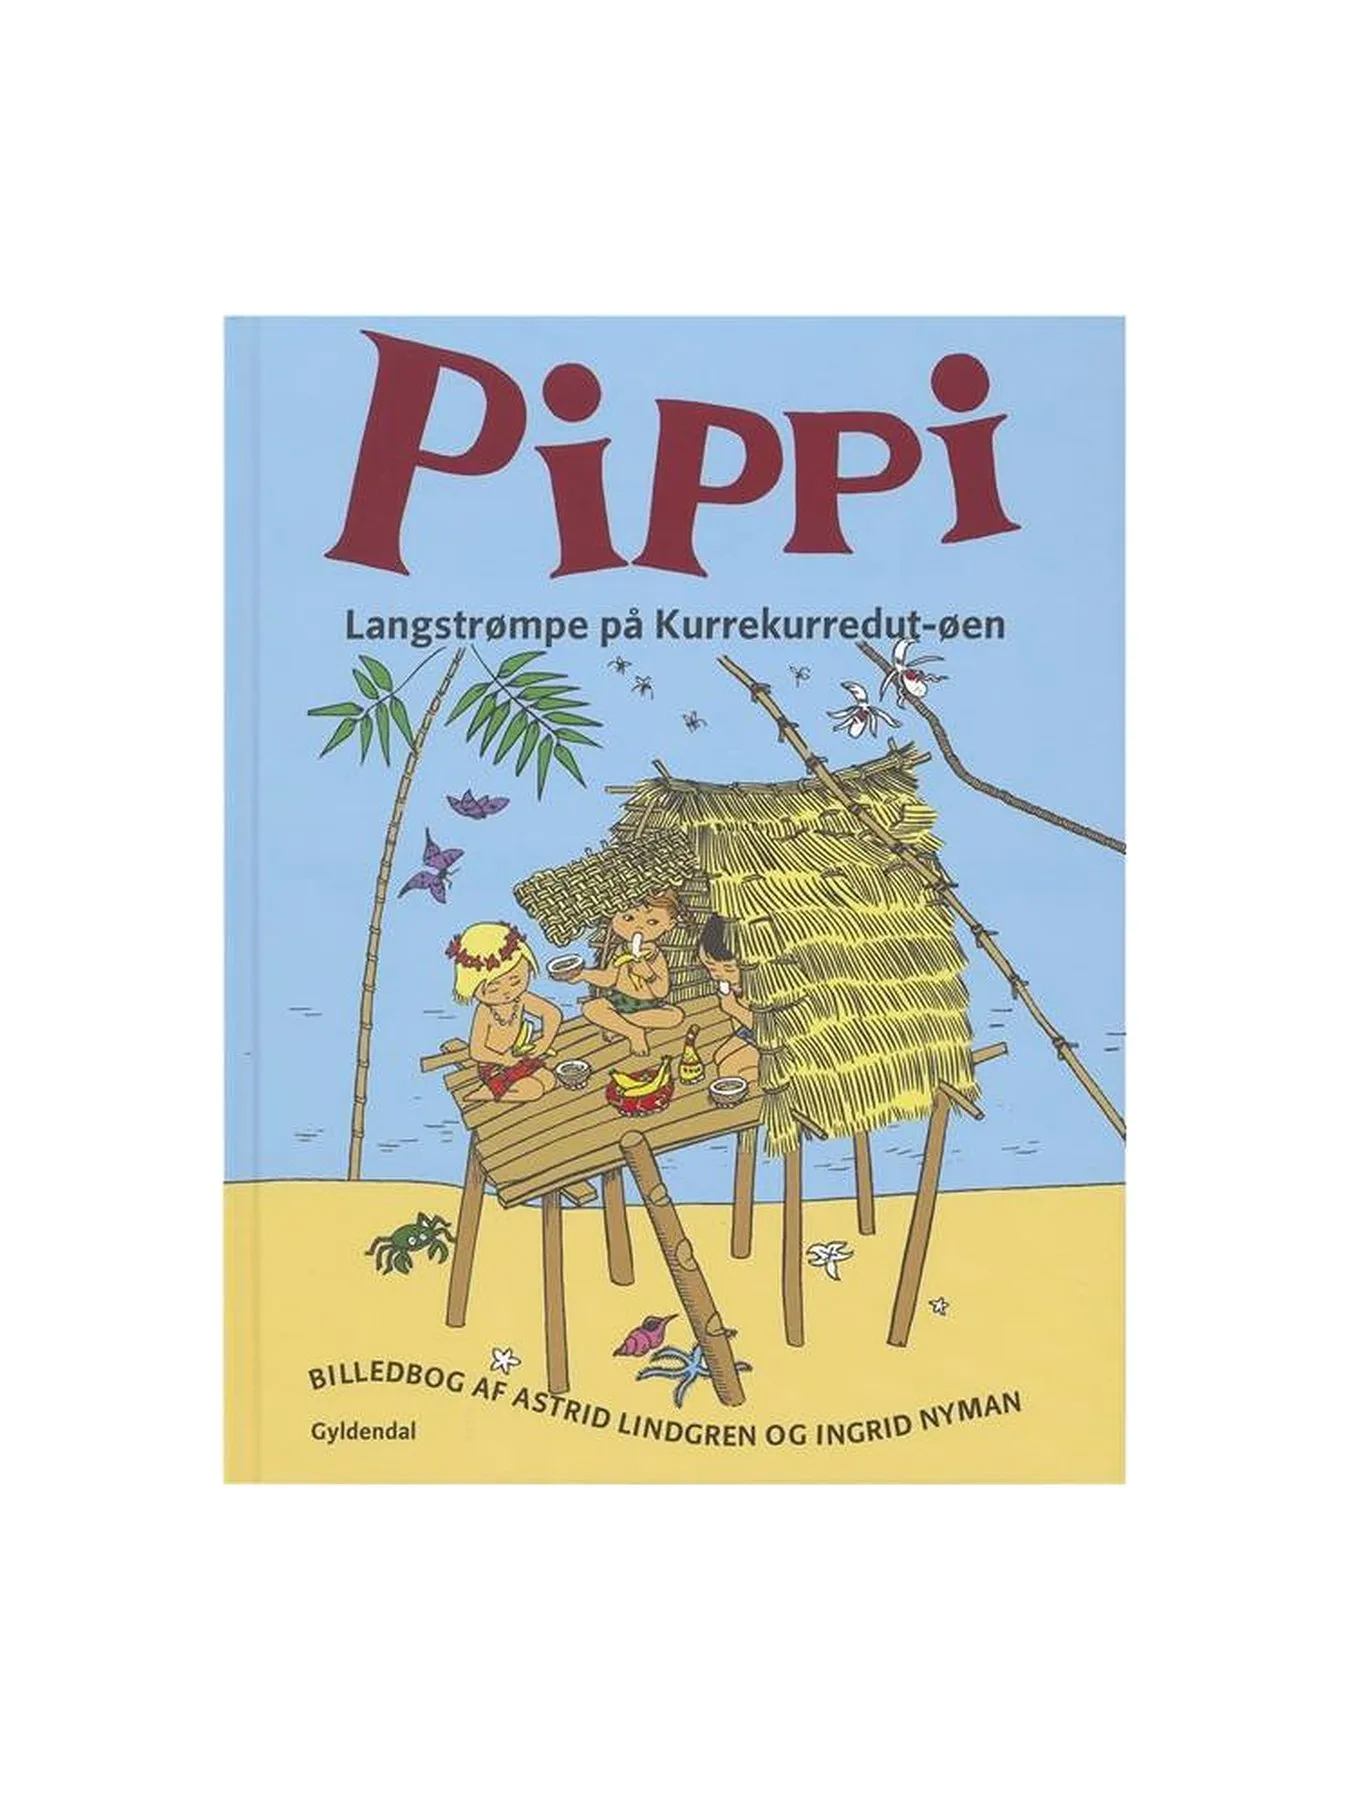 Picture book Pippi at Kurrekurredutt-øen